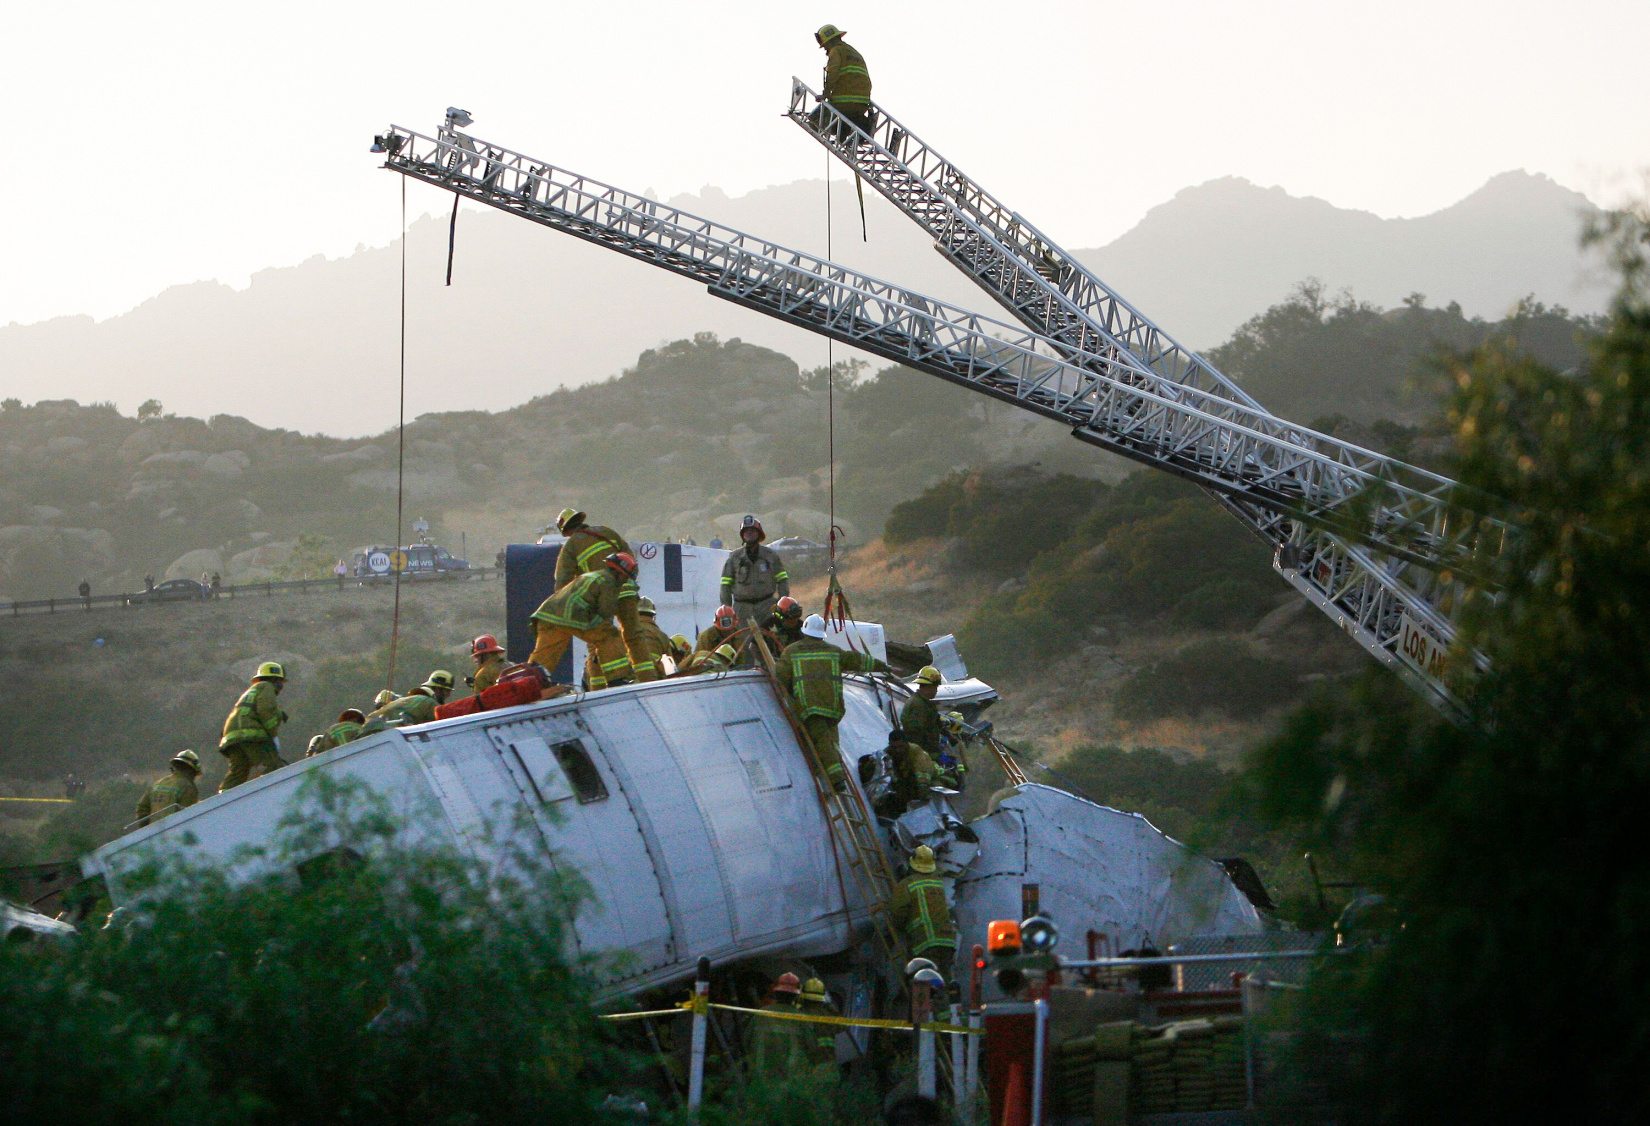 （LC：20Jul-22）12 年 2008 月 300 日，从洛杉矶联合车站到奥克斯纳德的 Metrolink 通勤列车在查茨沃斯地区与货运列车相撞后，消防员正在营救受害者。2 多名消防员正在努力扑灭火焰据洛杉矶消防局称，并救援受害者。 图片来源：阿拉米 | REUTERS/Gus Ruelas（美国）| 编号：1D052MXNUMX